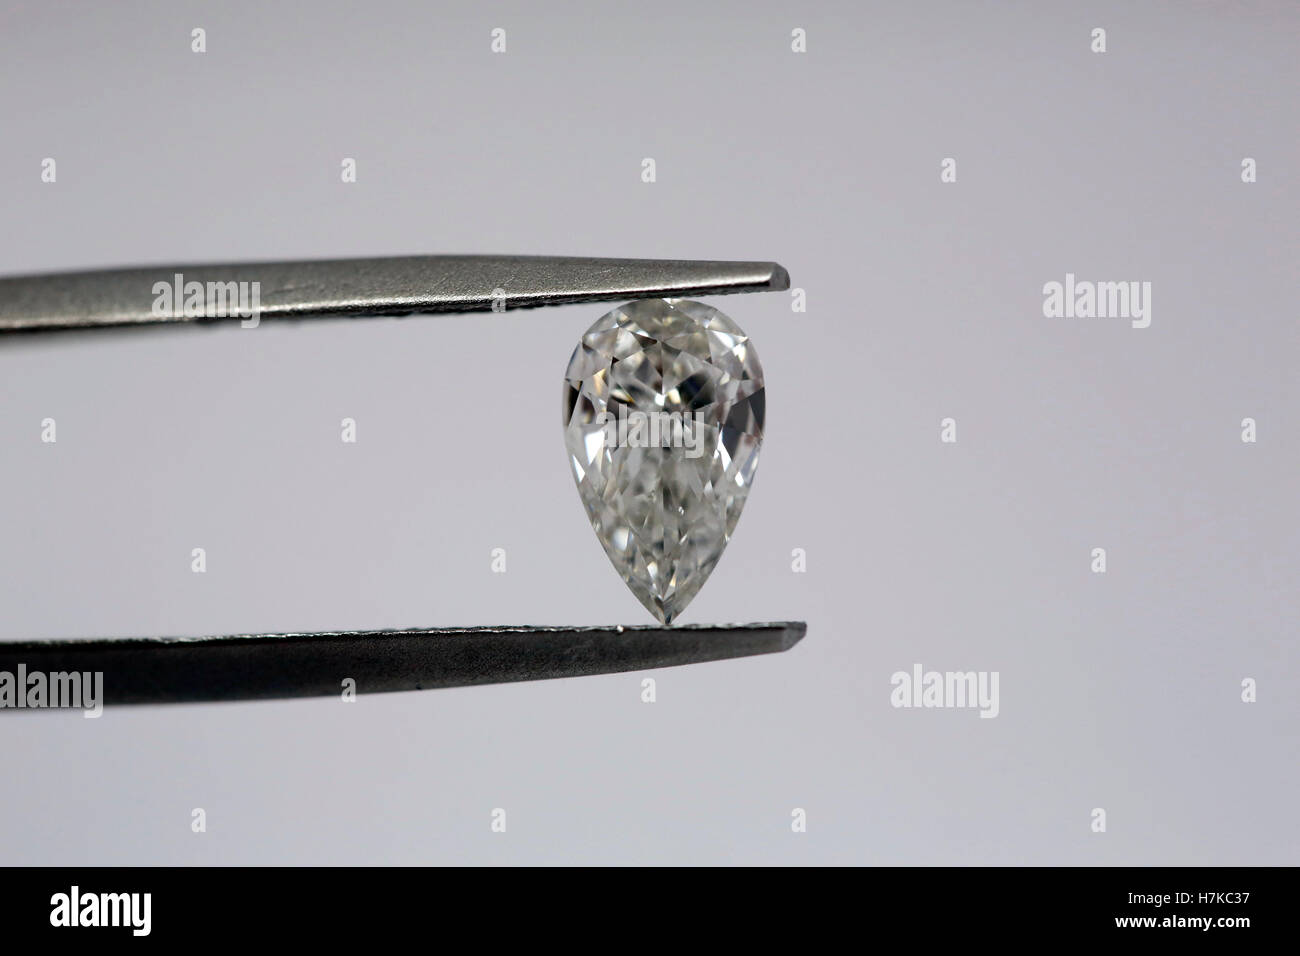 Pear shaped loose diamond Stock Photo